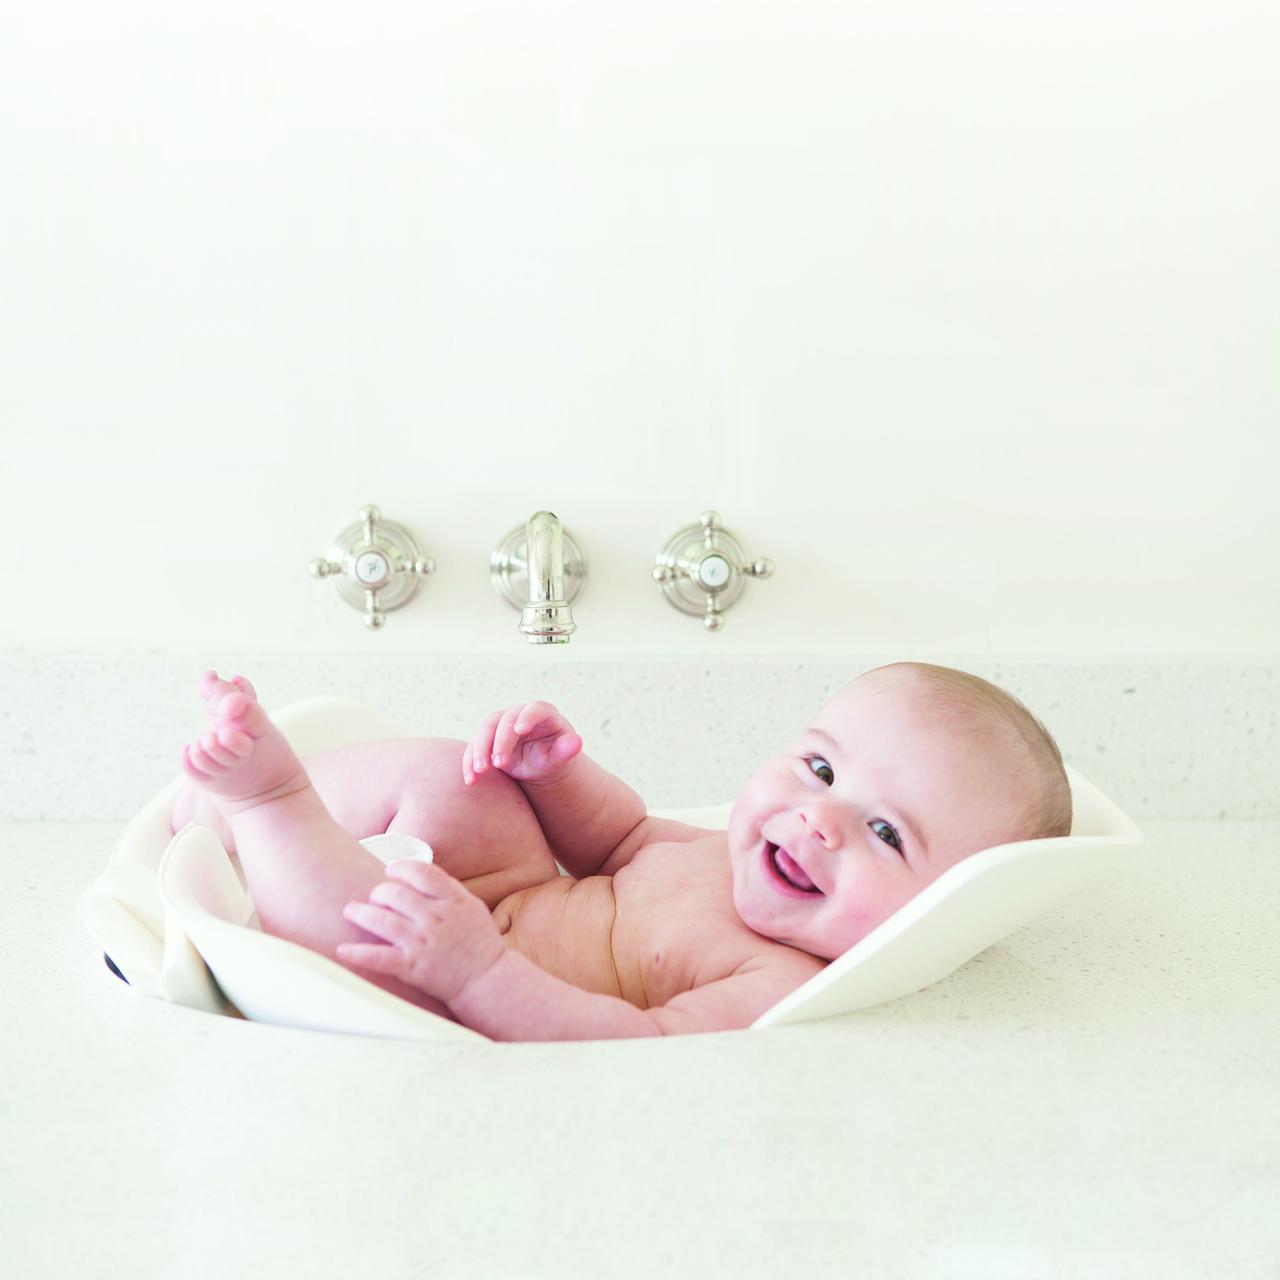 Puj - Infant Sink Bath Tub - image 1 of 2